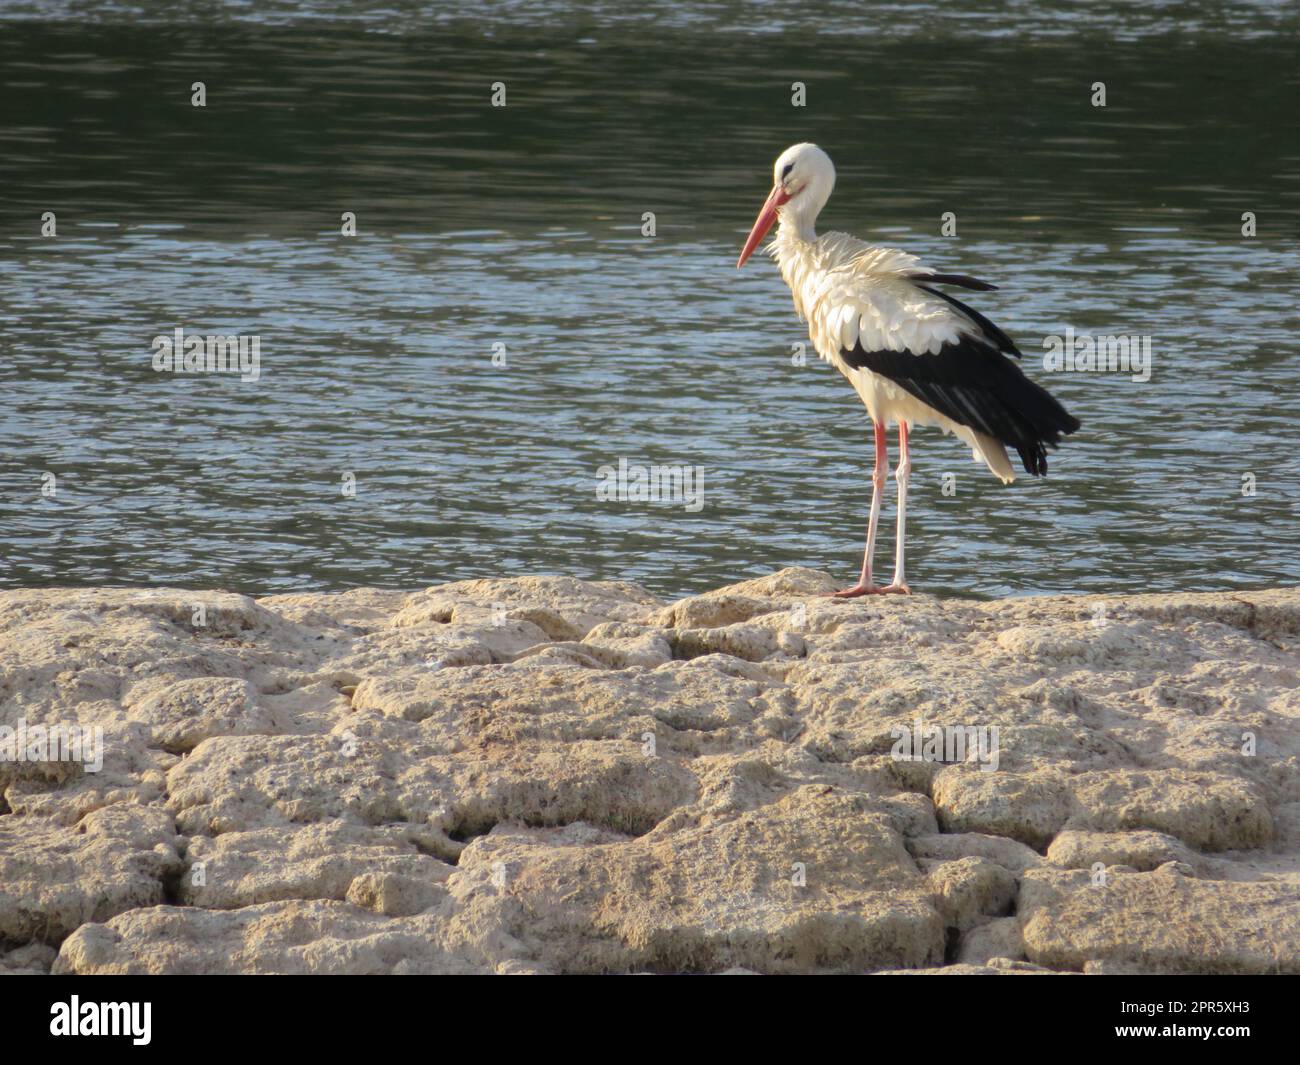 large black and white bird stork long red beak river water Stock Photo